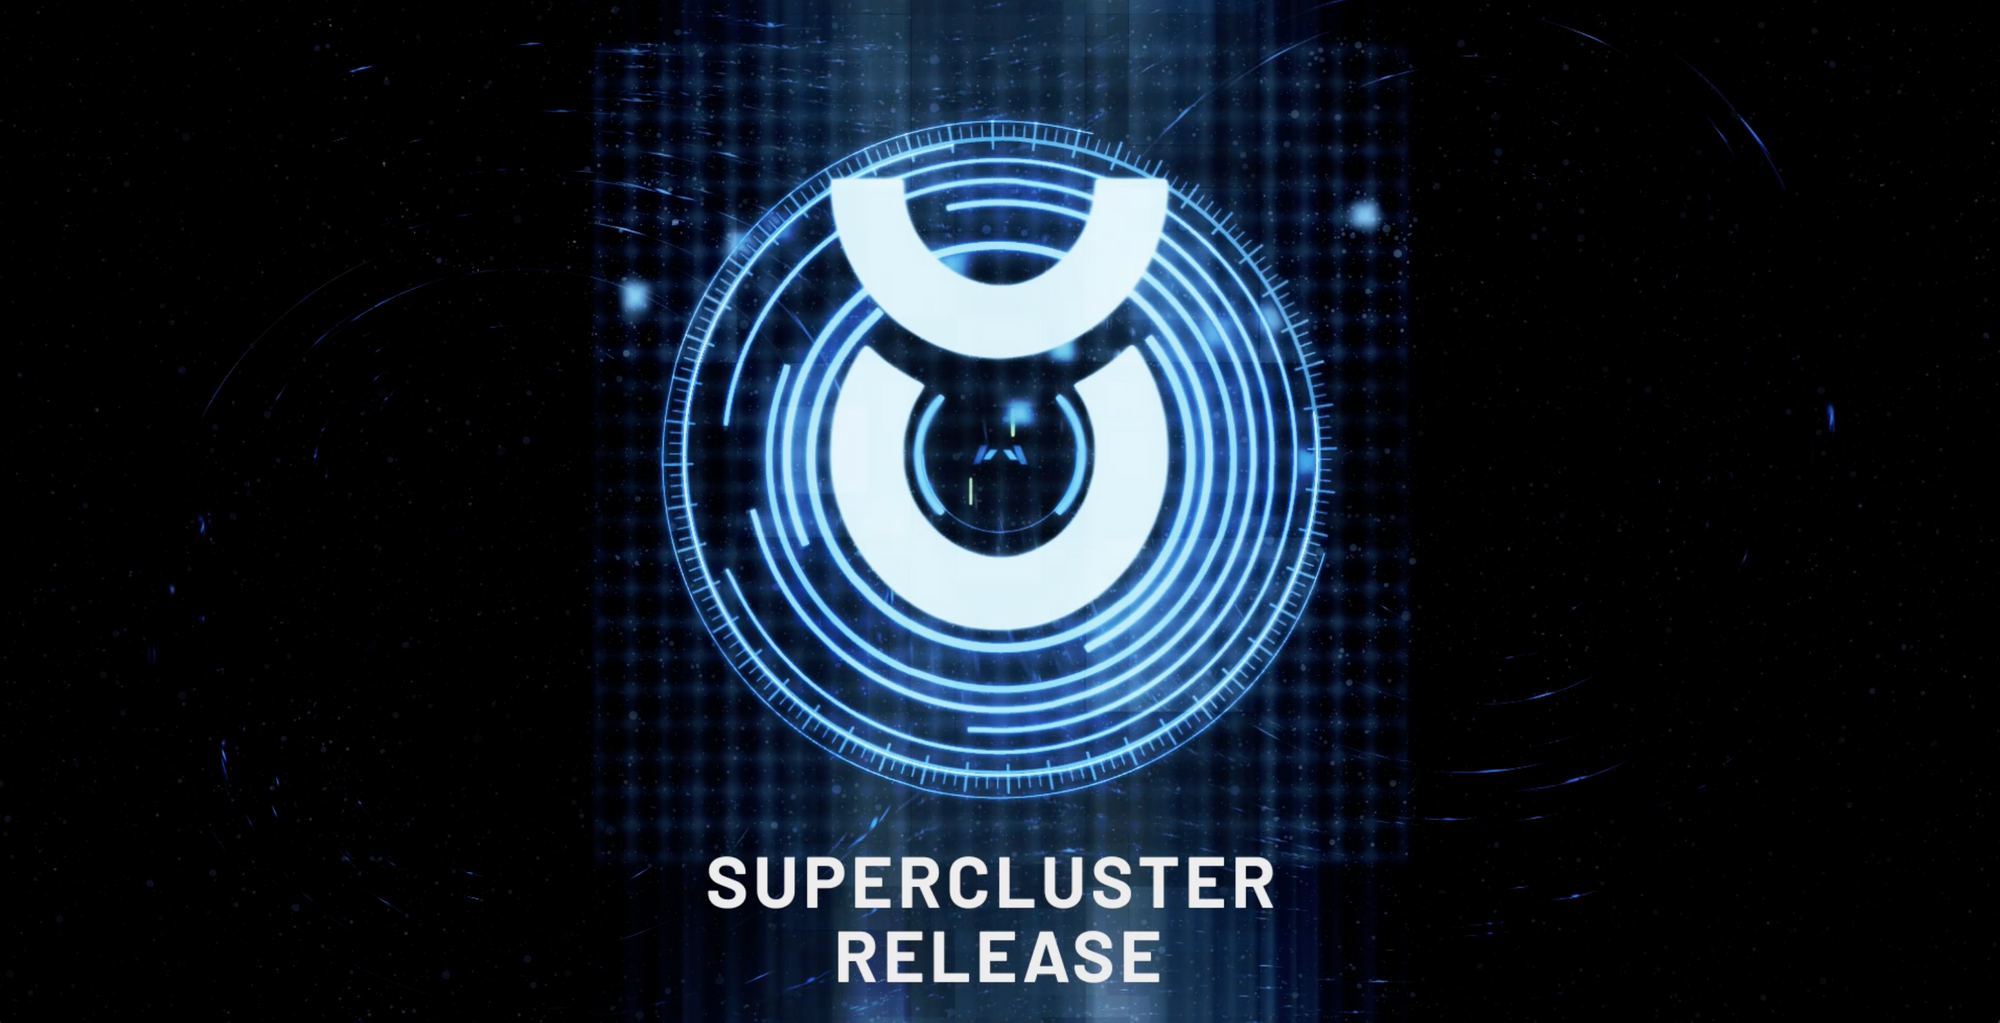 Supercluster Release